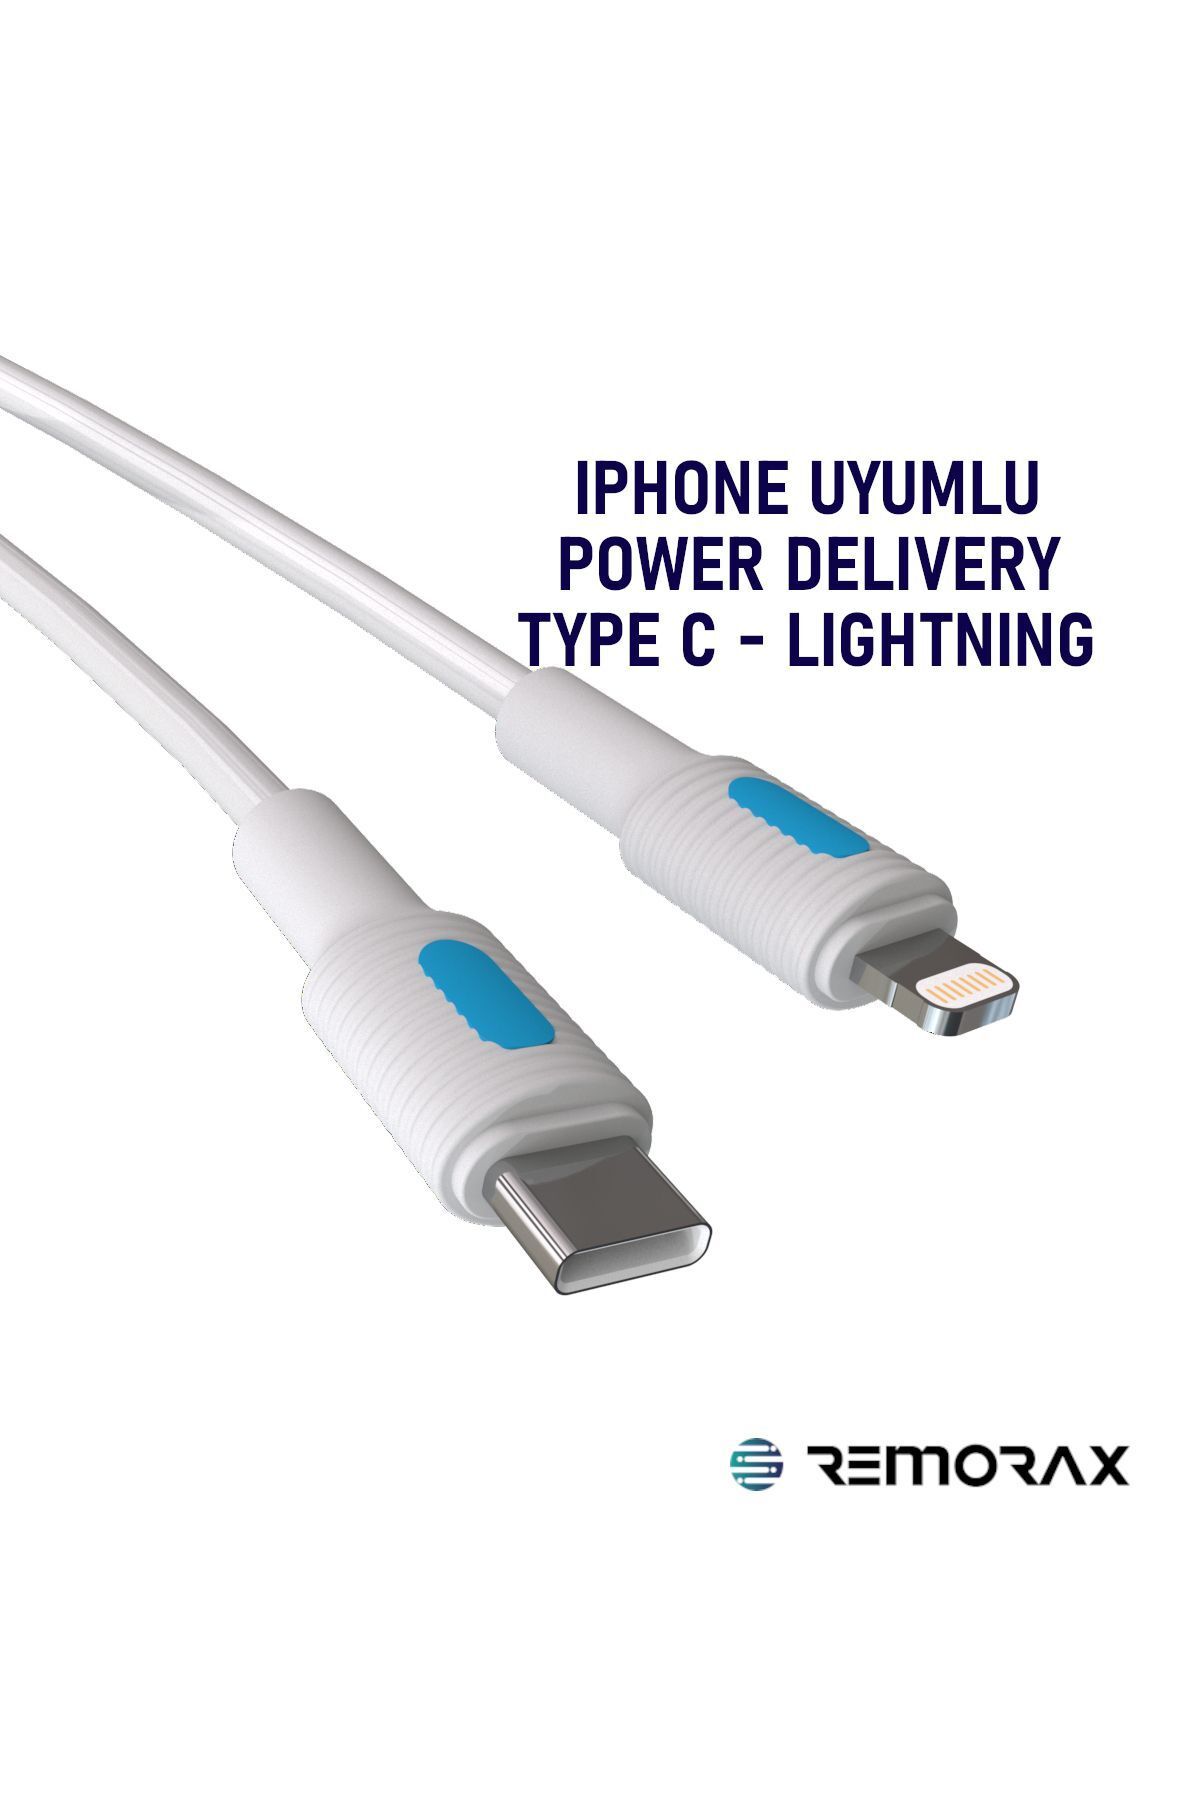 REMORAX Coral Iphone Uyumlu Power Delivery, Type C-lightning, 150 Cm, Pd 27watt Şarj Kablosu, Mavi/beyaz